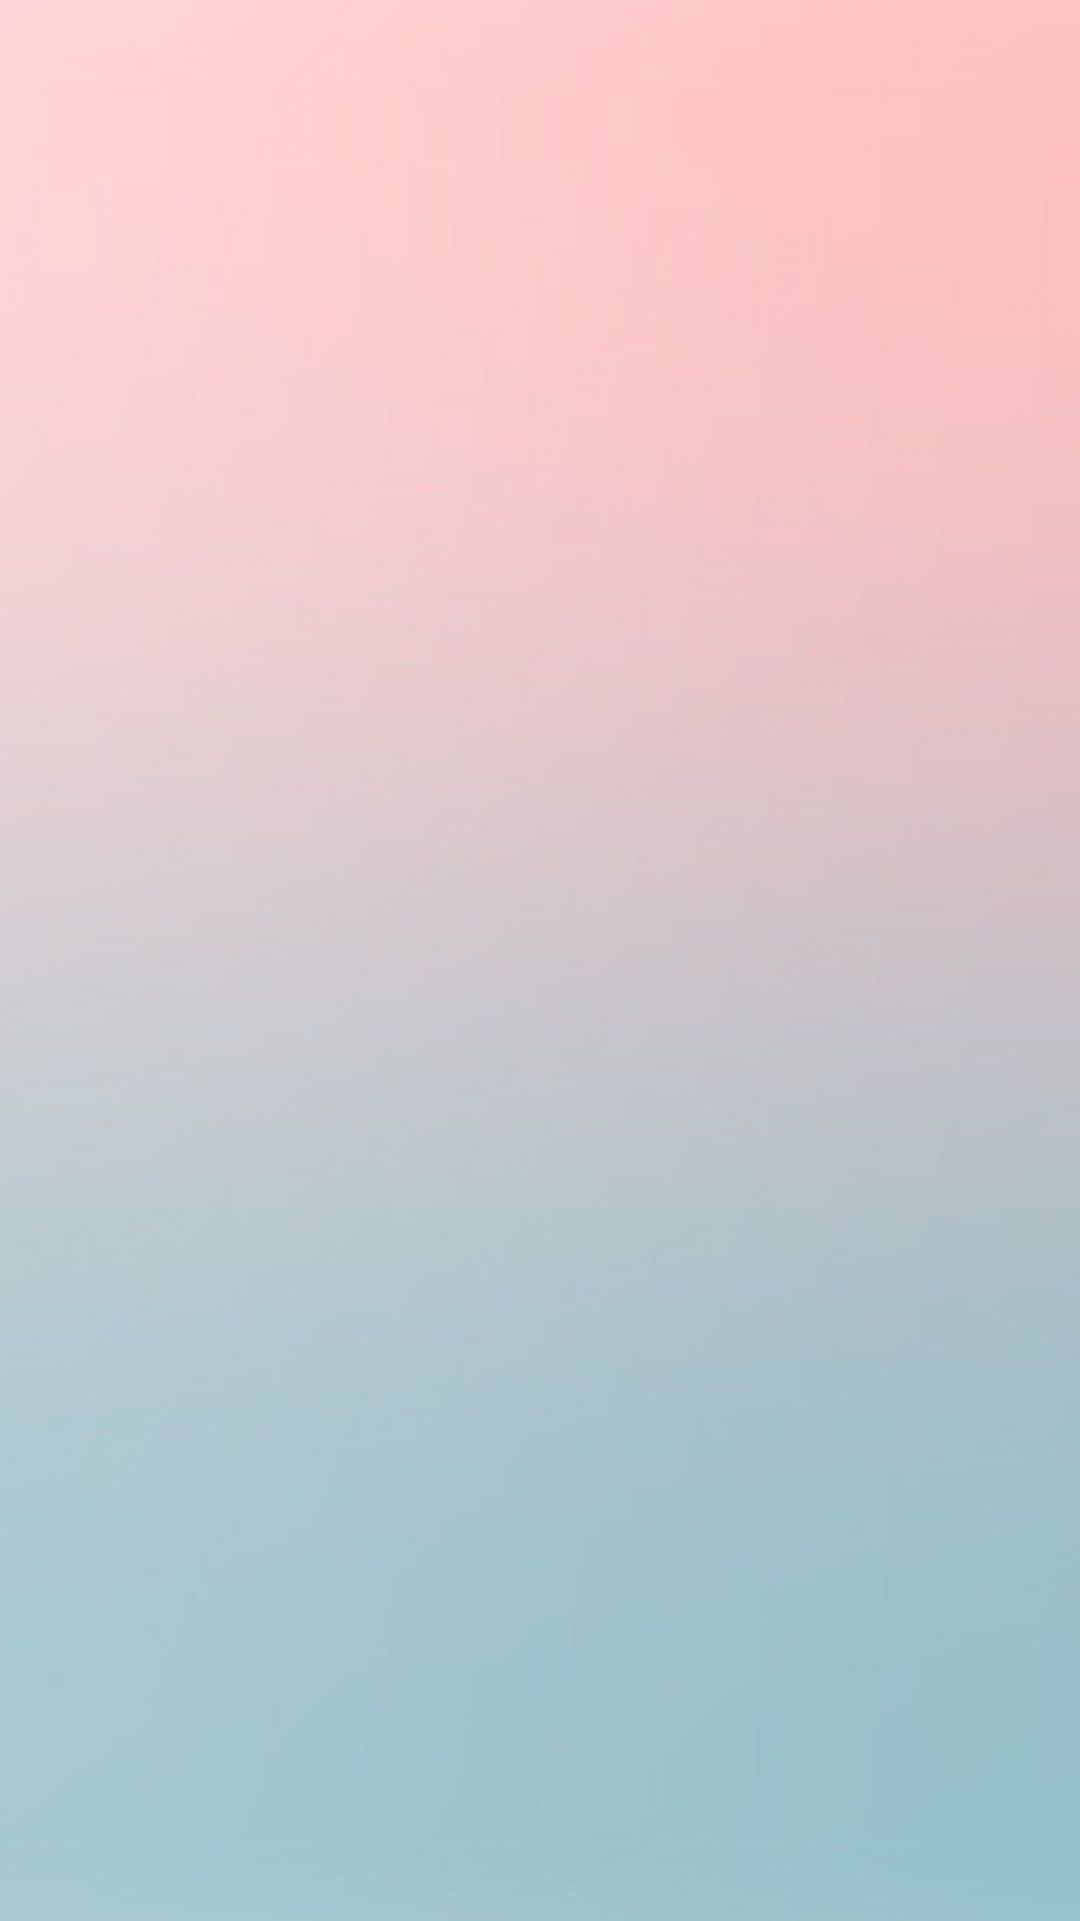 iPhone wallpaper. pink blue soft pastel blur gradation / iPhone HD Wallpaper Background Download (1080x1921) (2021)